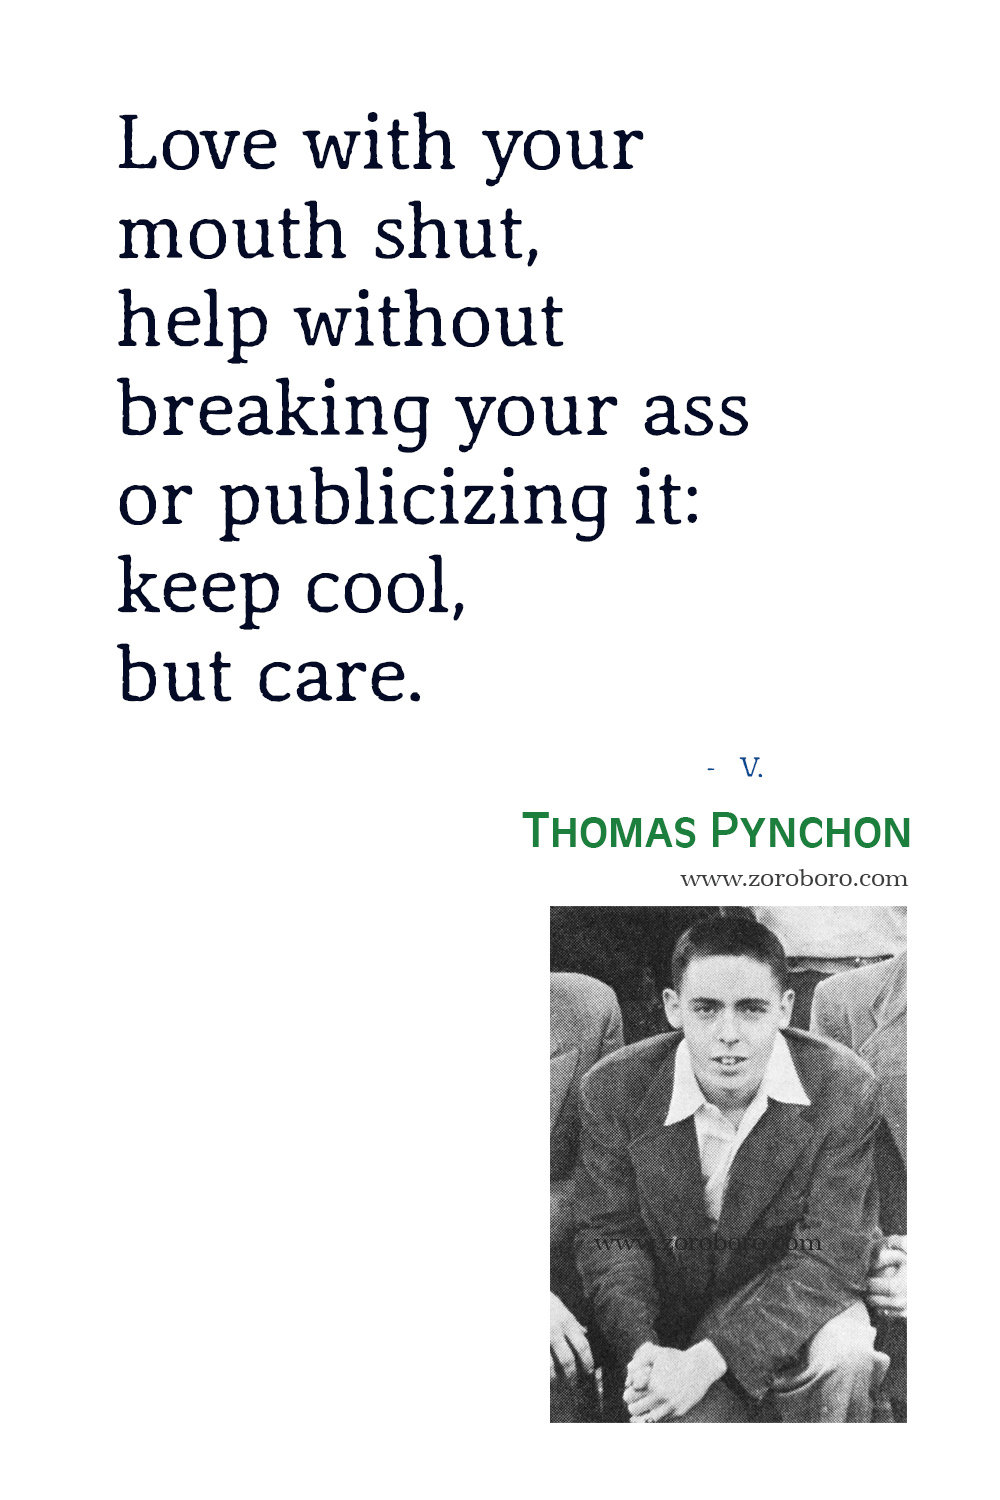 Thomas Pynchon, Thomas Pynchon Gravity's Rainbow Quotes, Thomas Pynchon V. Quotes, Thomas Pynchon Short Stories, Thomas Pynchon Books.